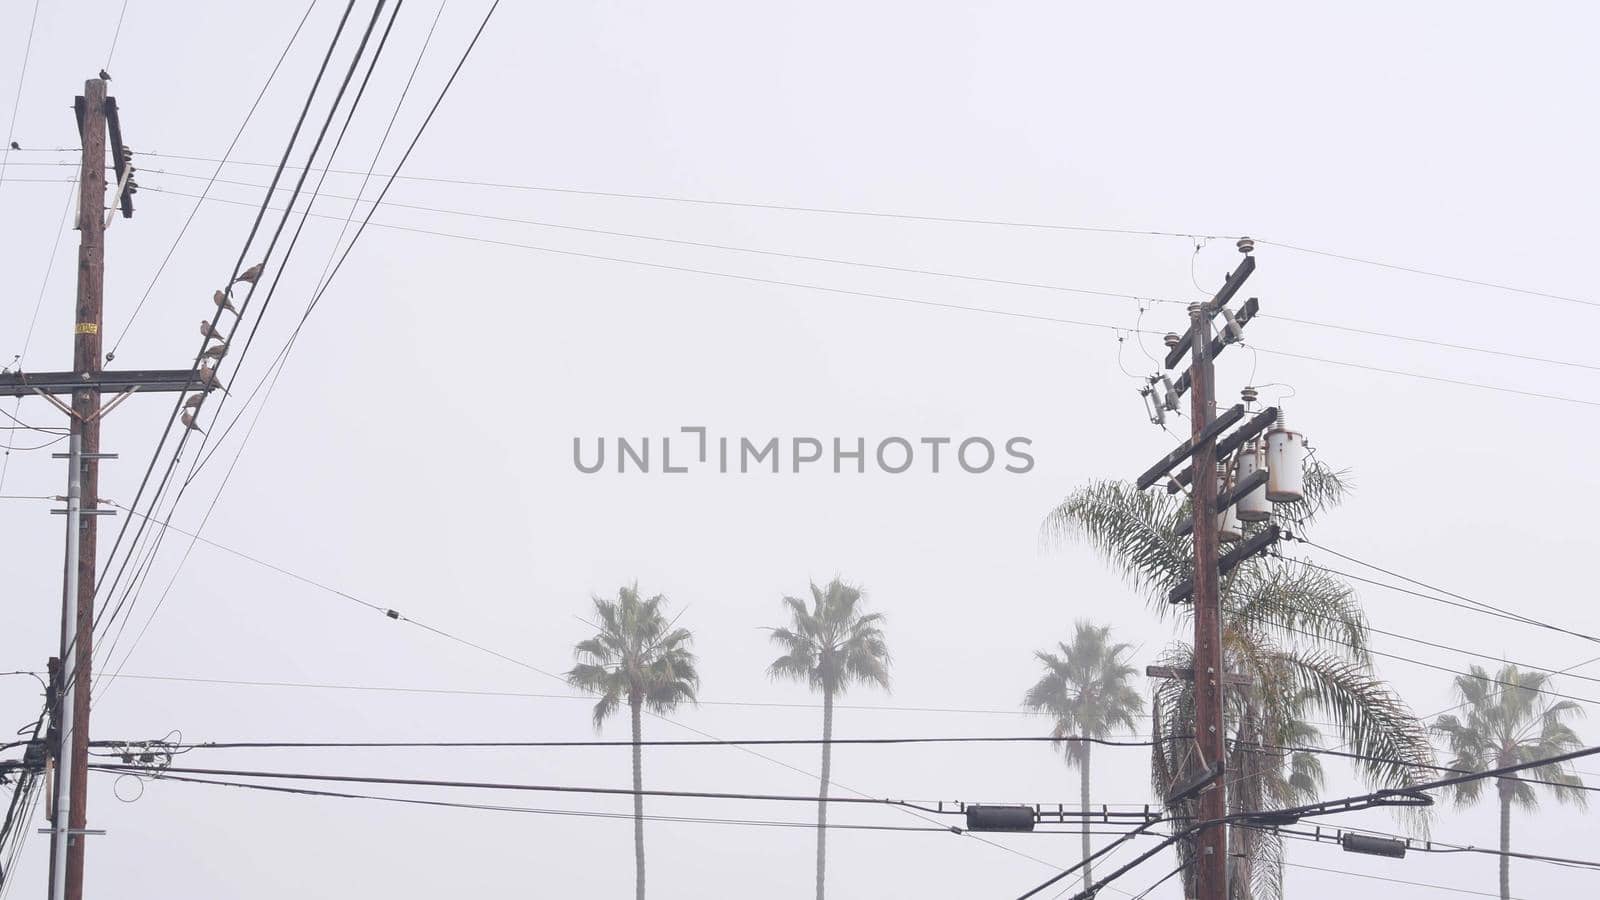 Palm trees in misty foggy weather, birds on power line, California city street. by DogoraSun